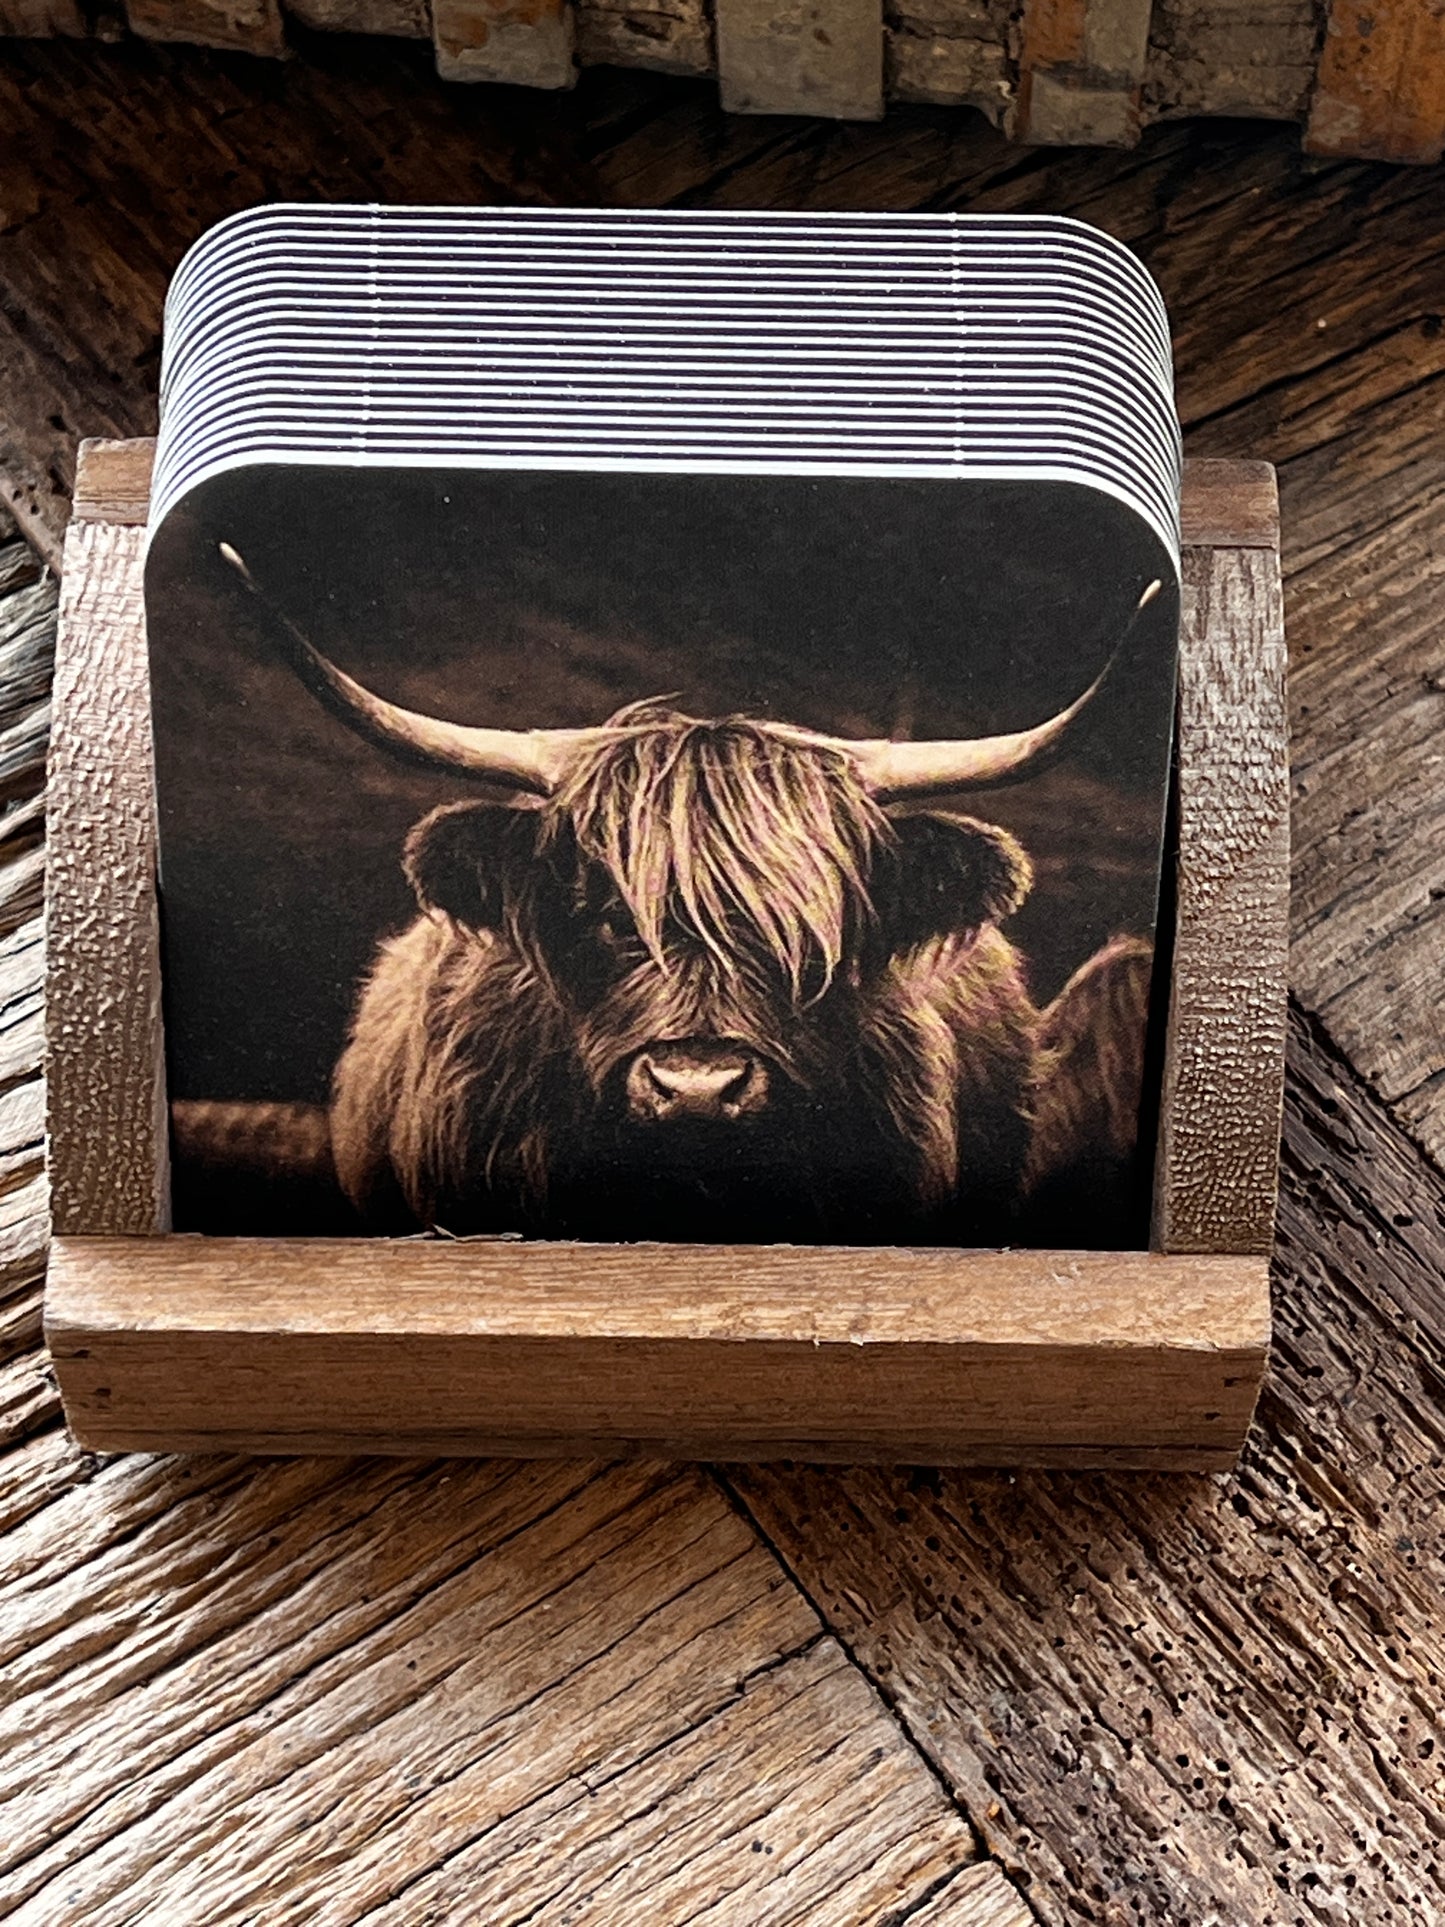 Coaster Buffalo (dark background) in holder